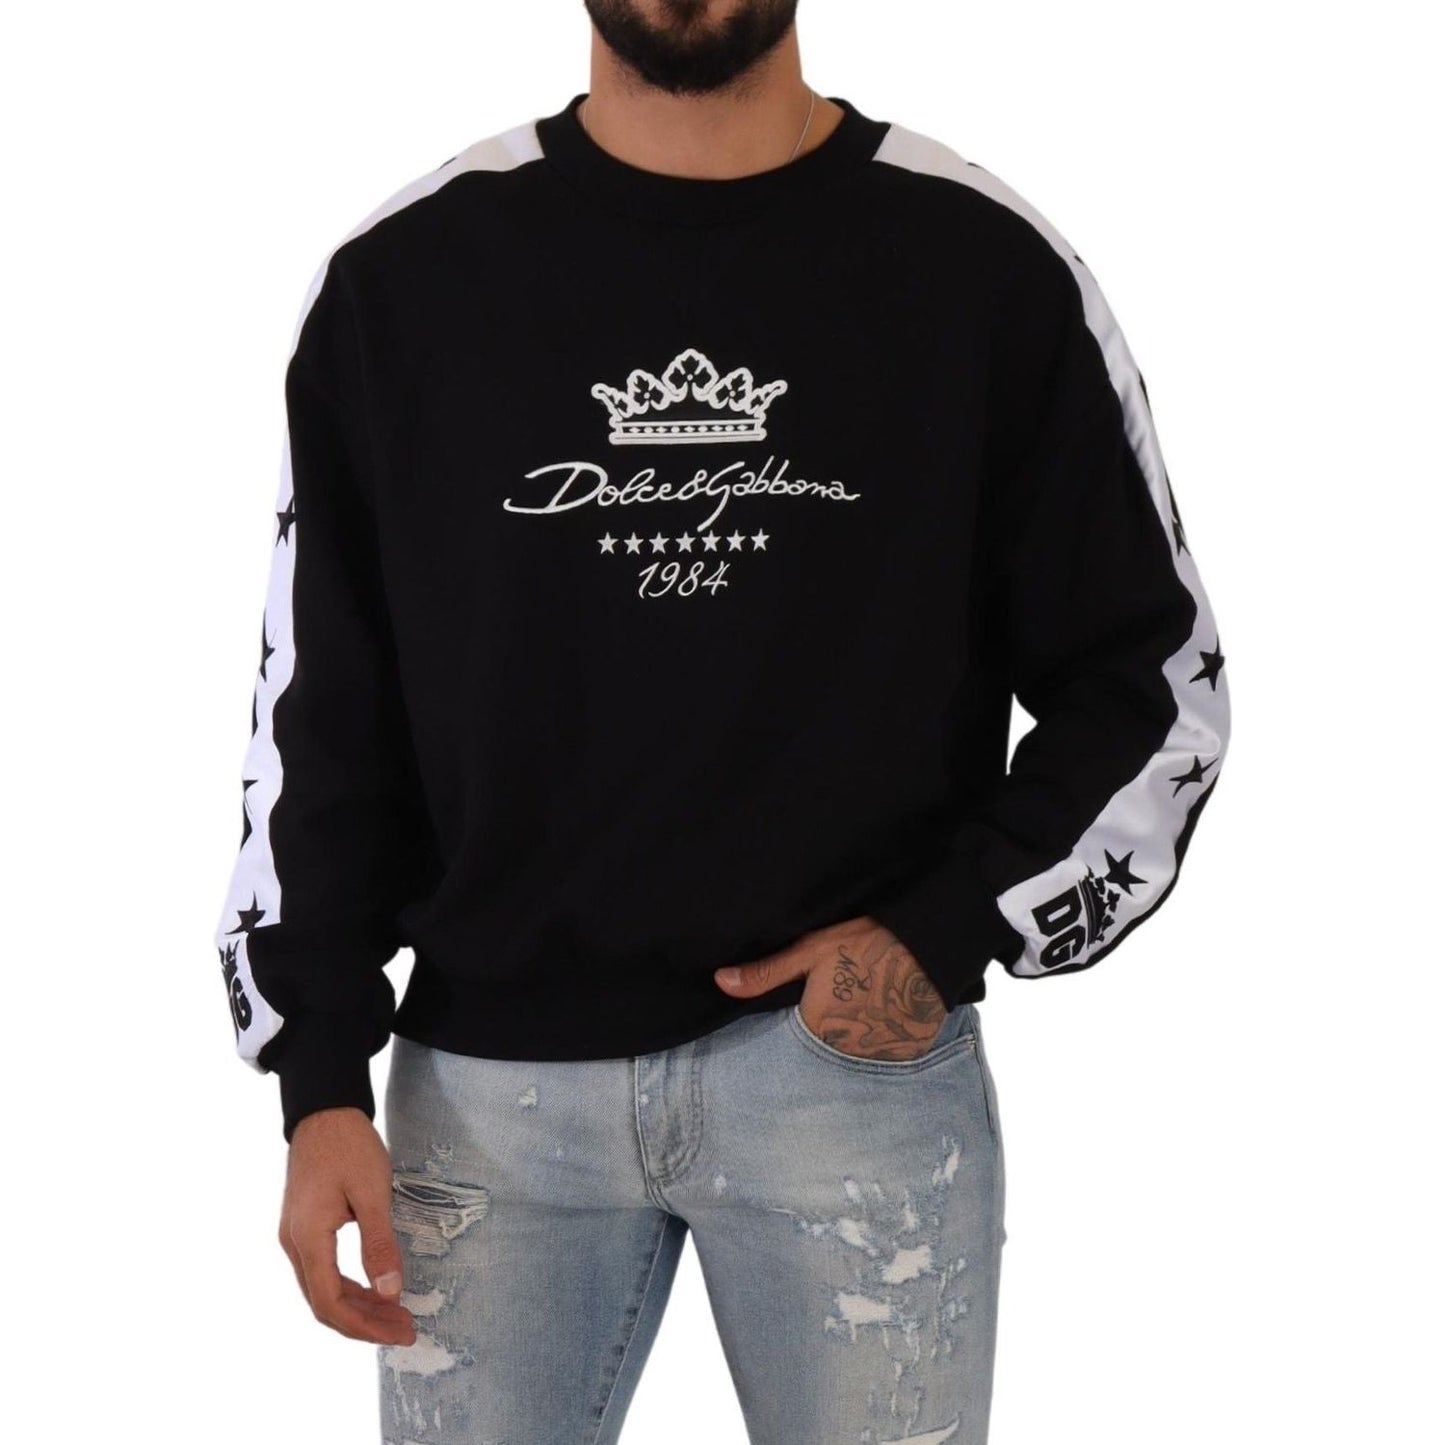 Dolce & Gabbana Elegant Crown 1984 Crewneck Sweater black-cotton-crewneck-crown-1984-stars-pullover-black